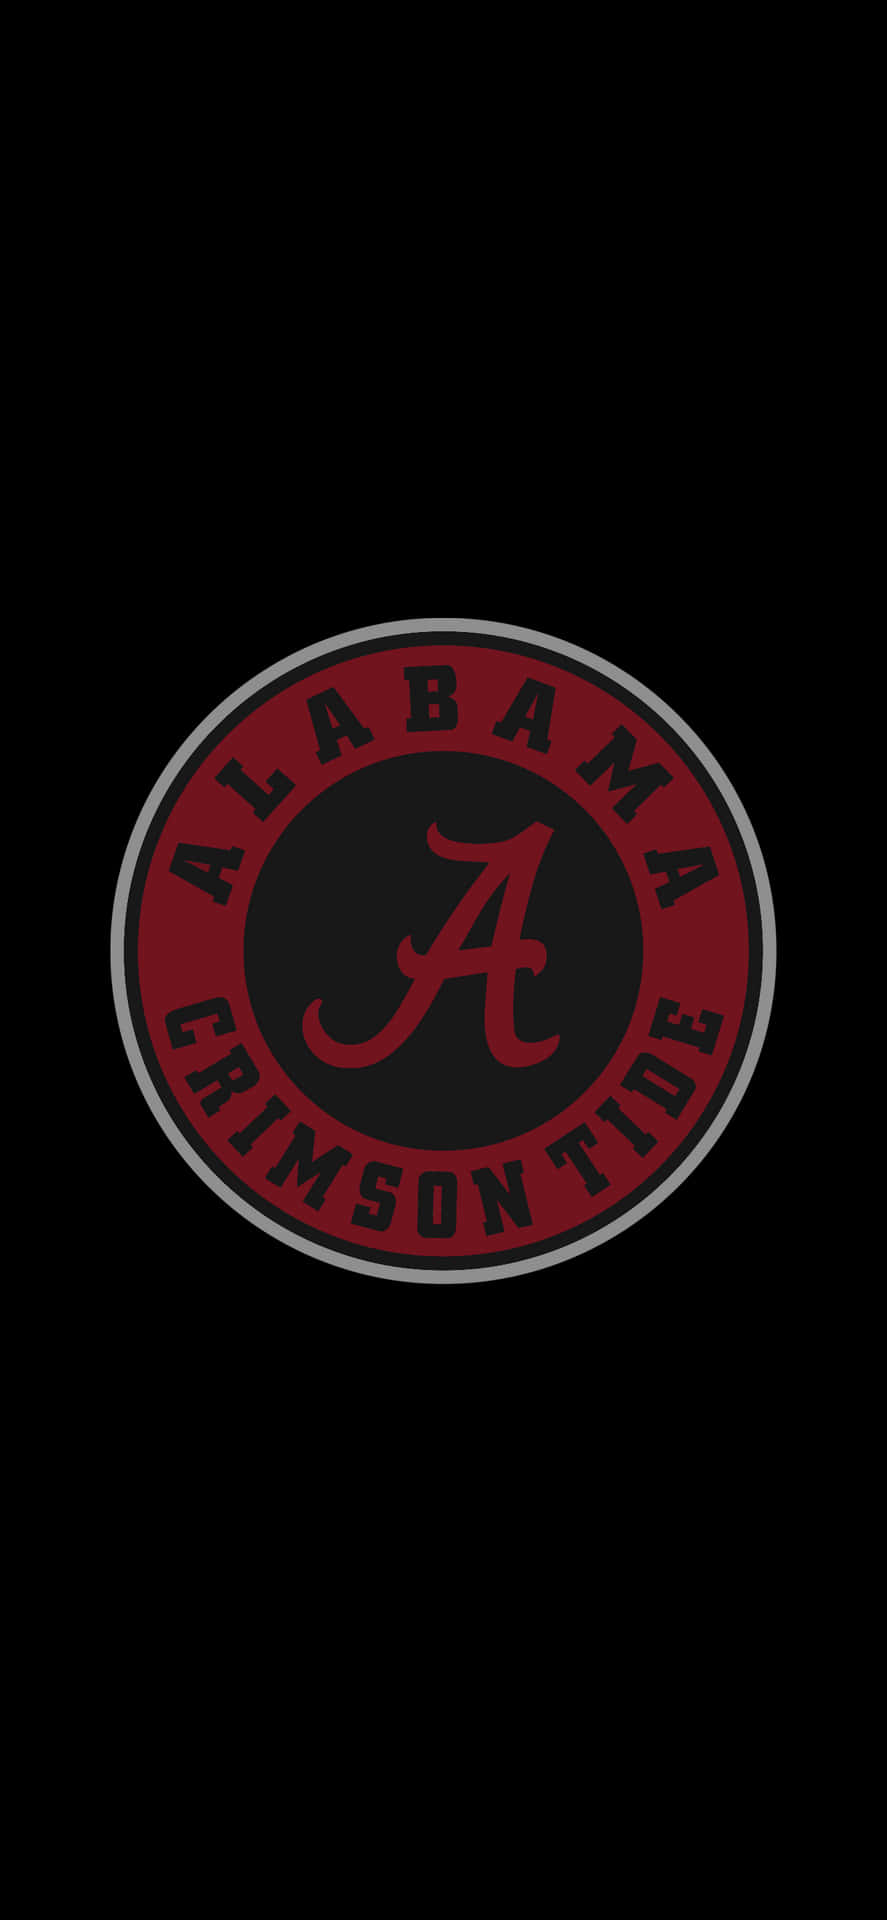 Alabama Fodbold Logo 1331 X 2880 Wallpaper